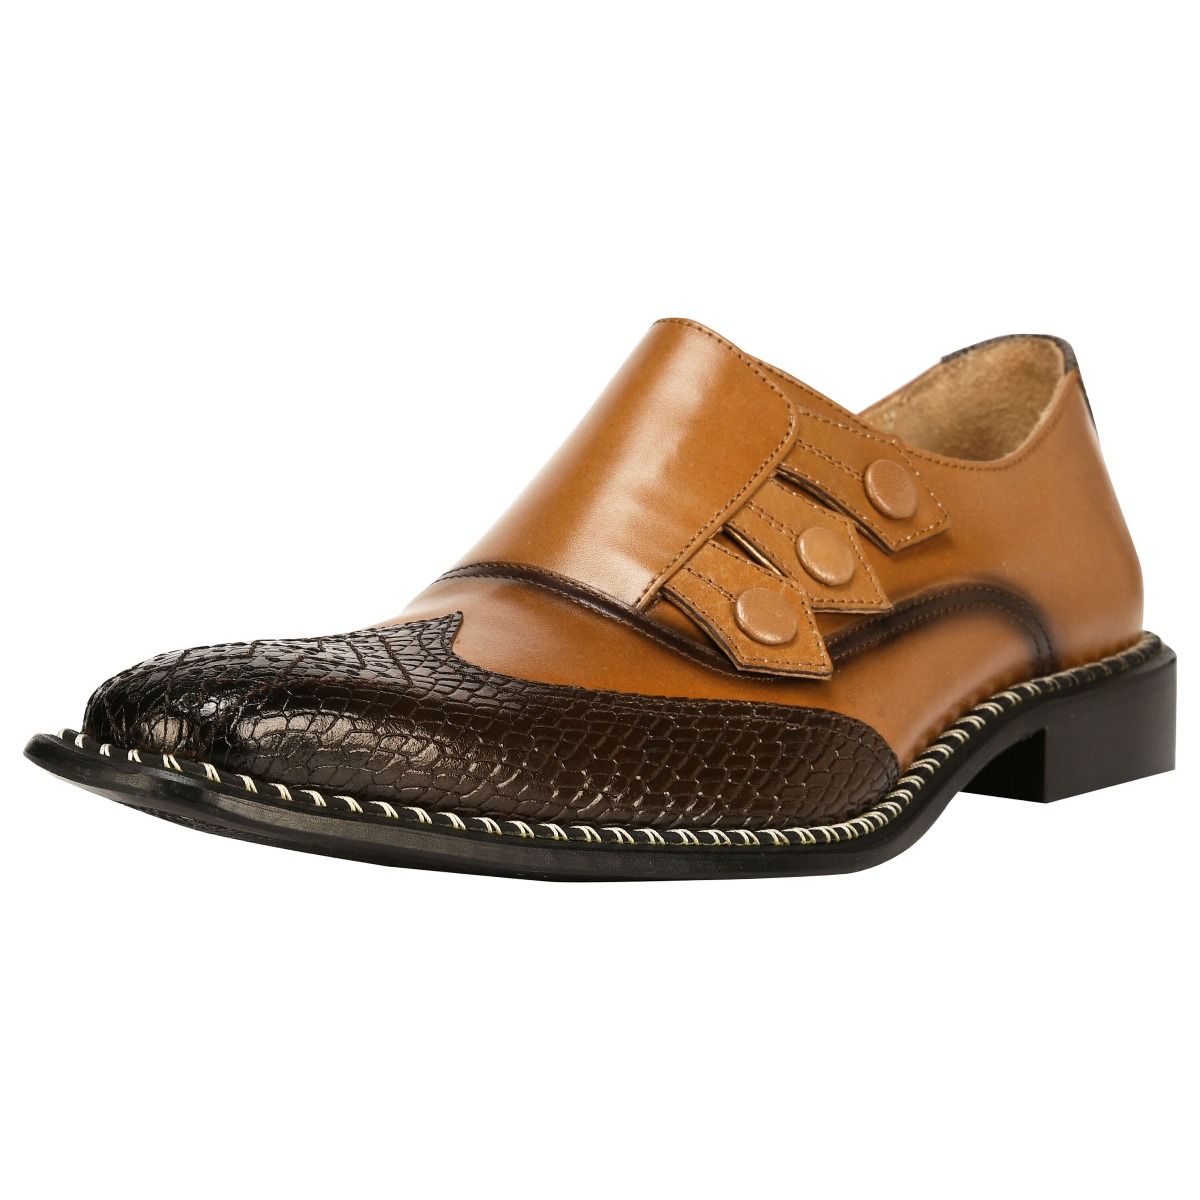 LIBERTYZENO Triple Monk Strap Slip-on Mens Leather Formal Wingtip Brogue Dress Shoes - image 1 of 5